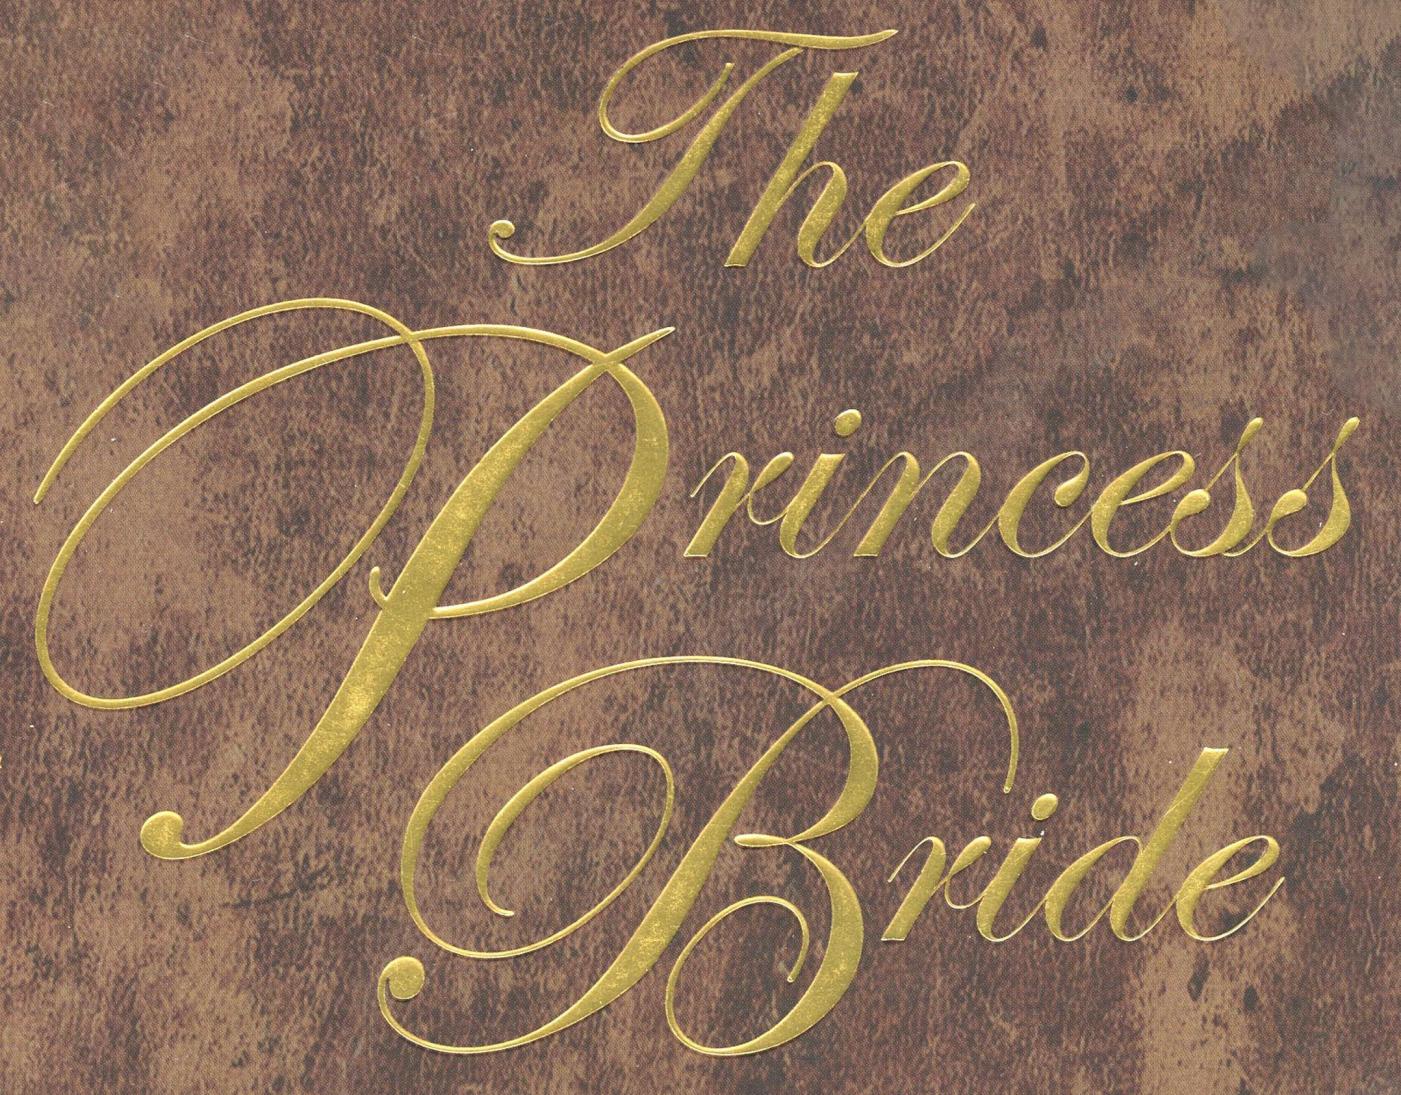 The Princess Bride font.jpg